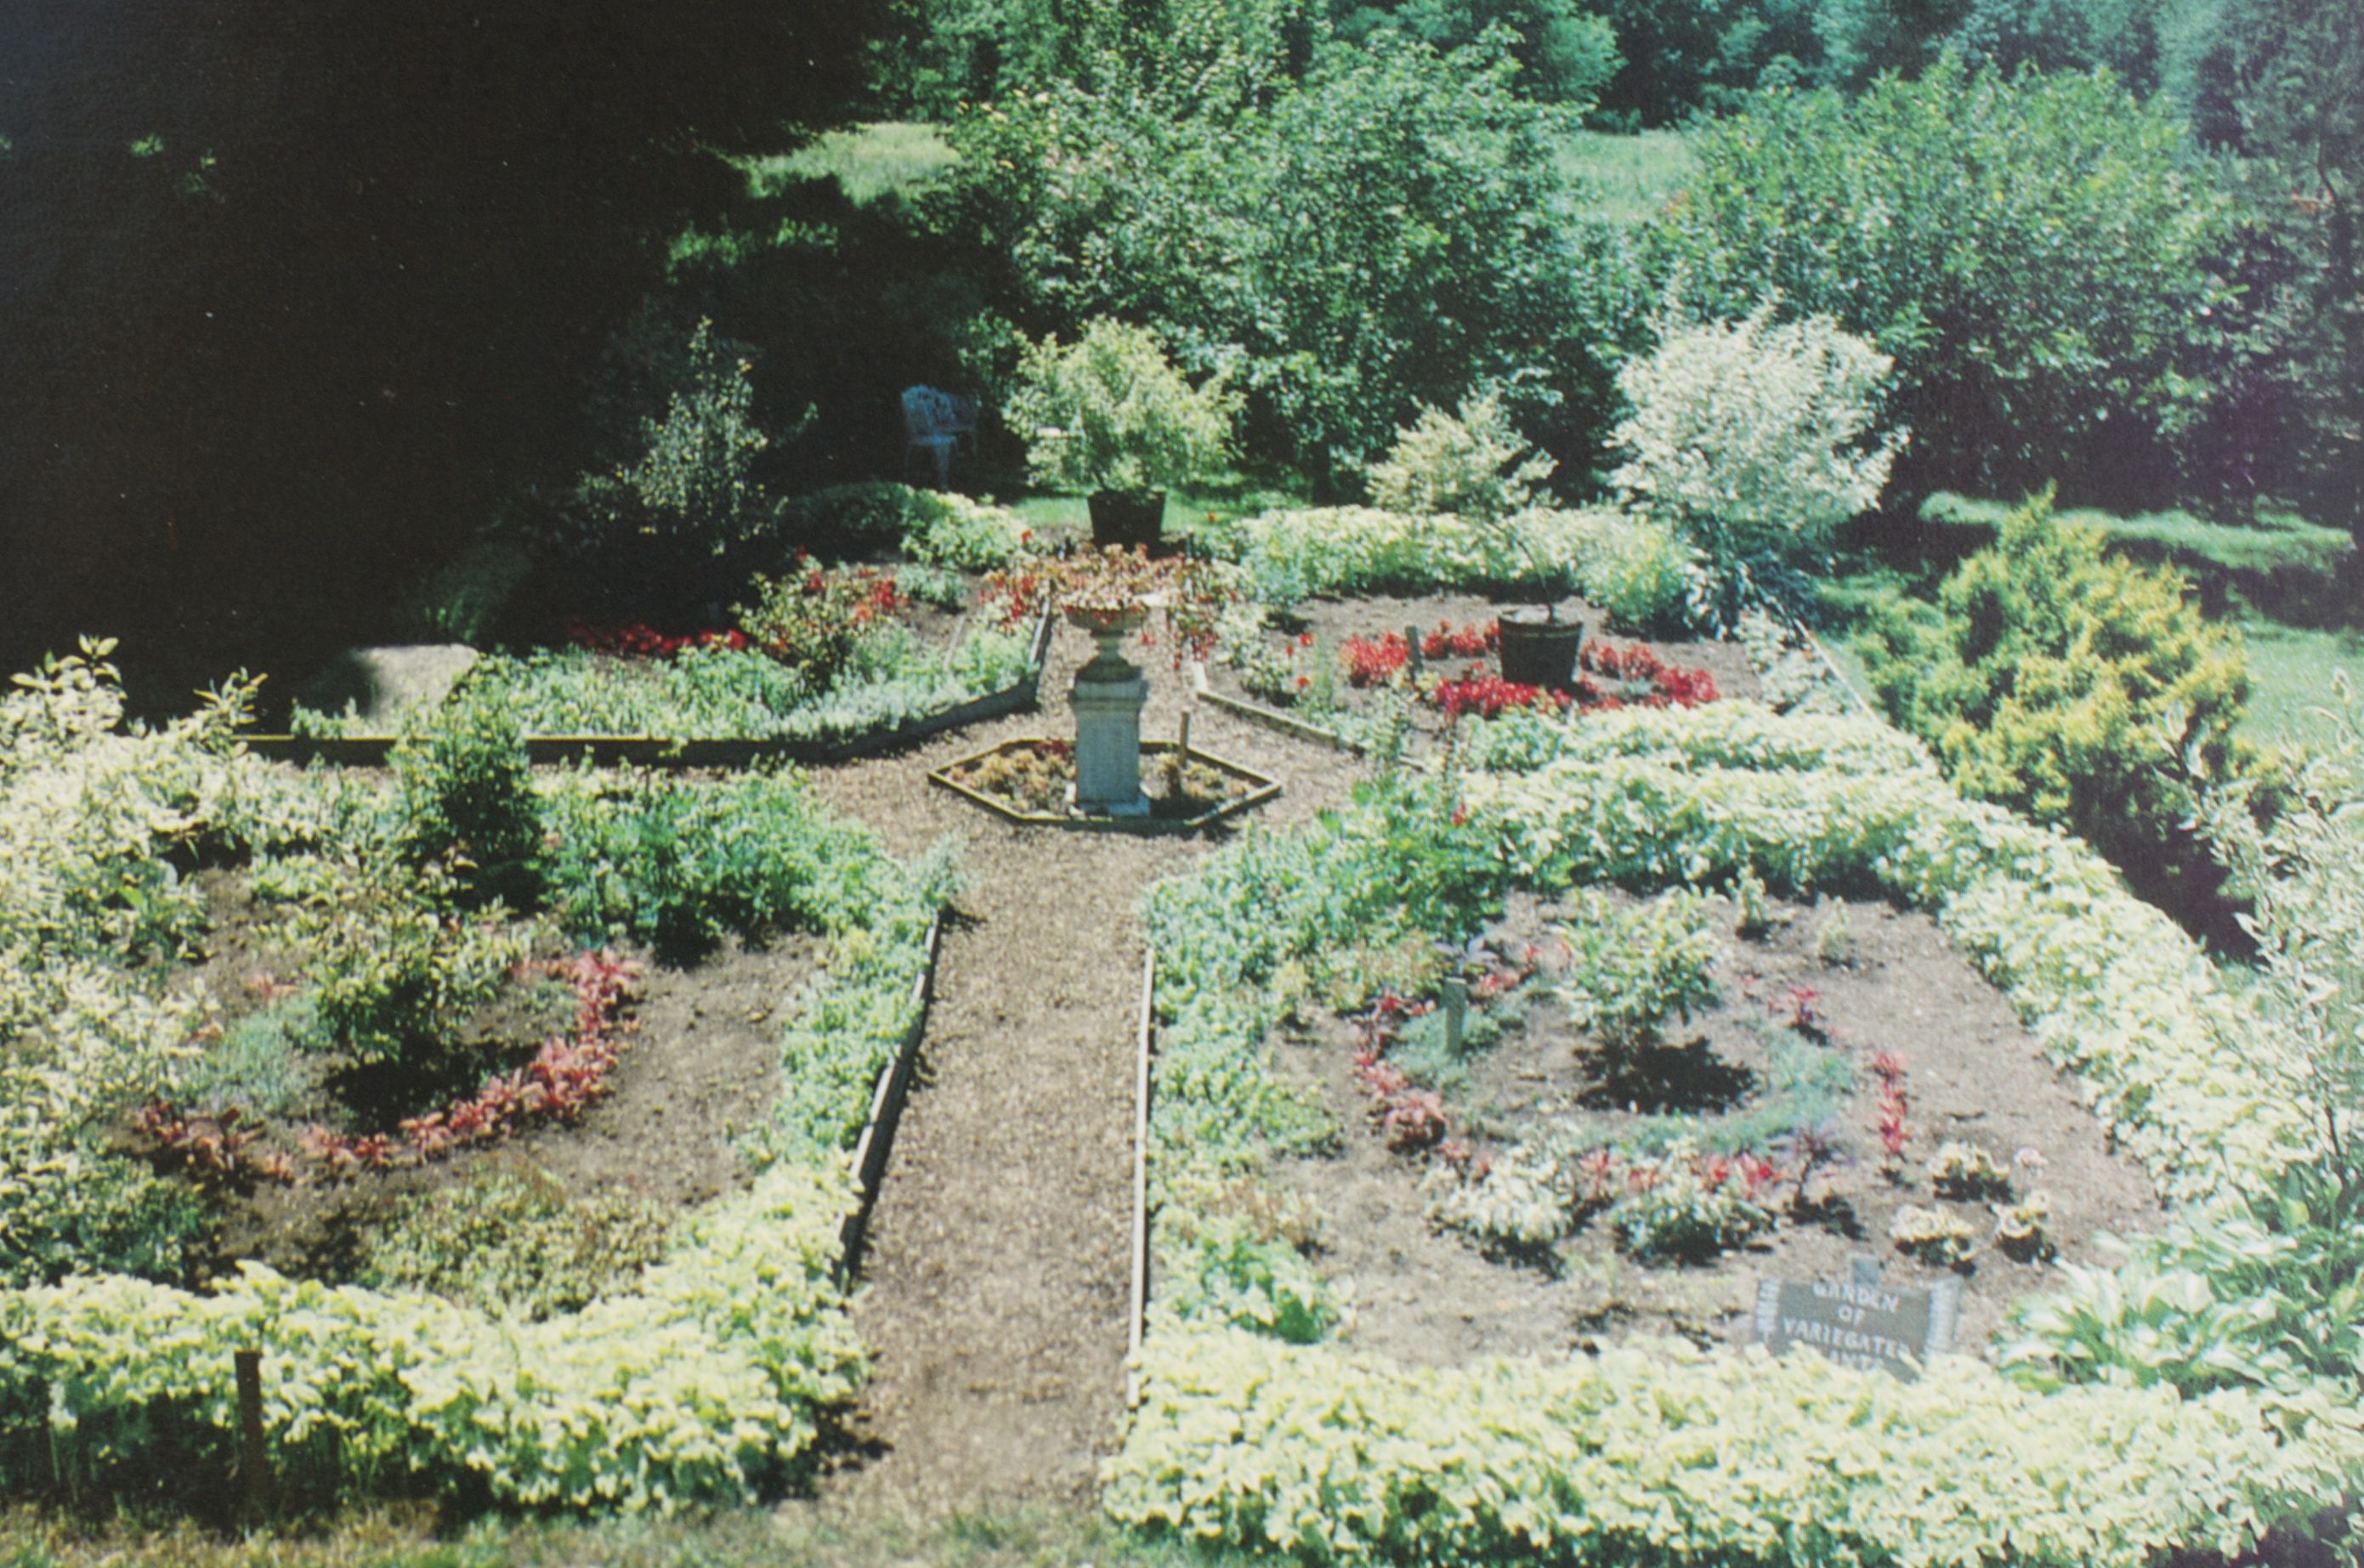 The Edwardian Period Garden